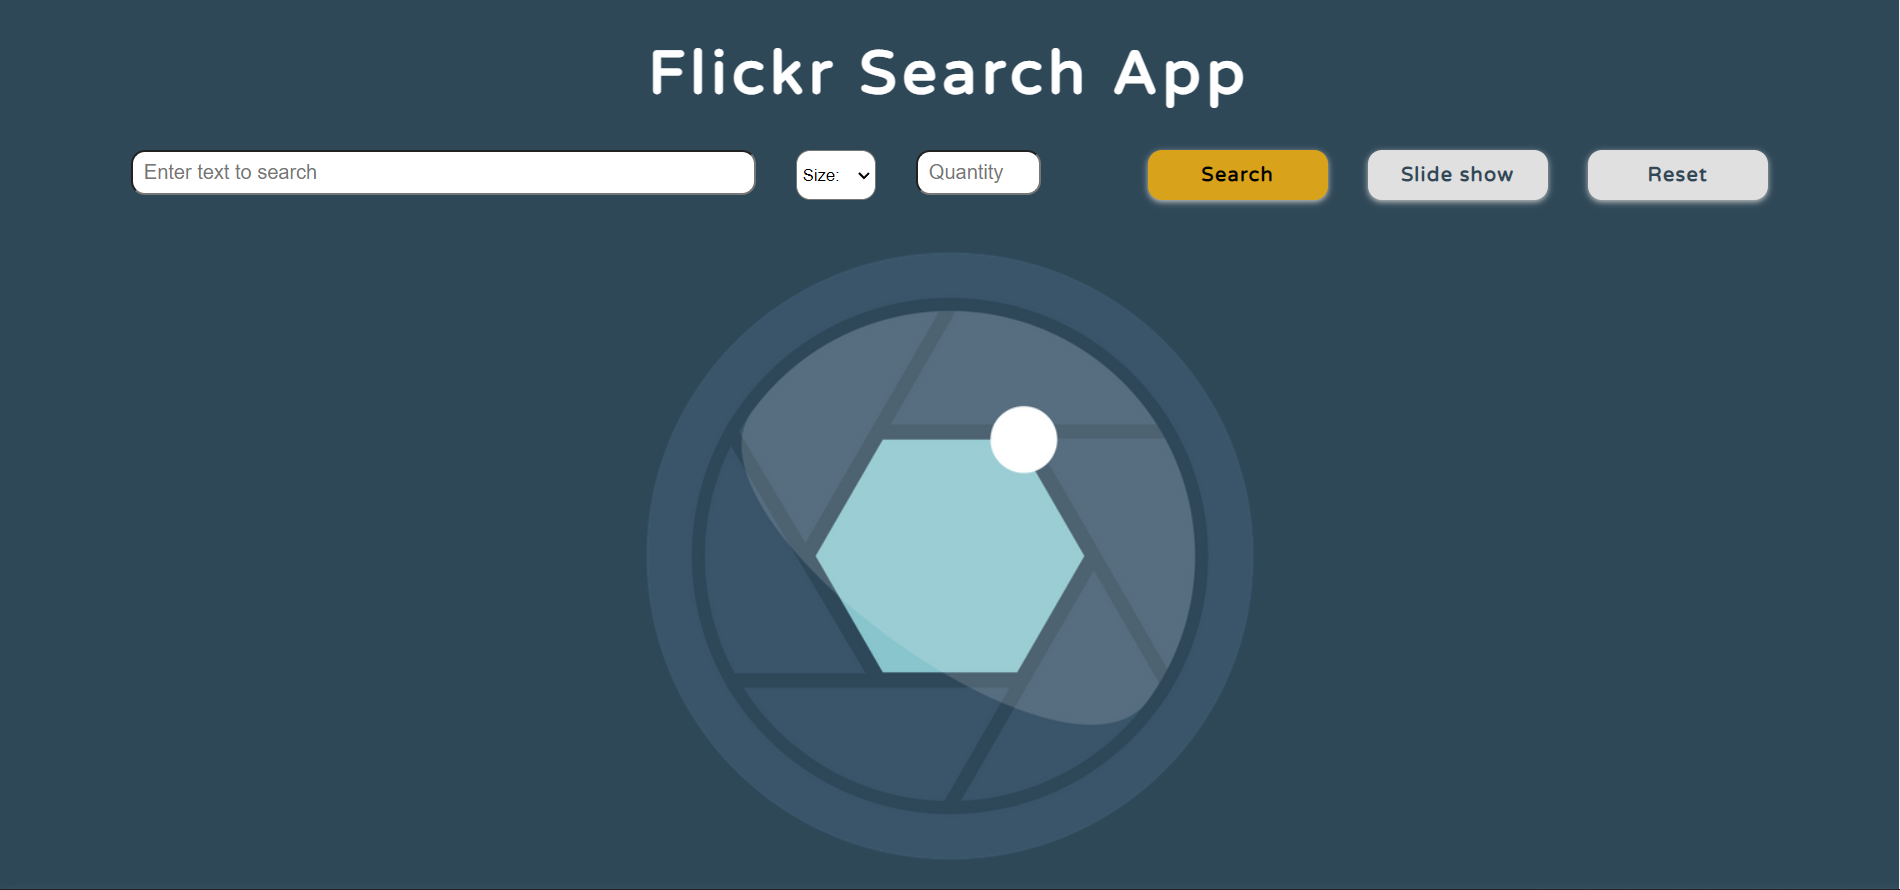 Flickr Search App 1